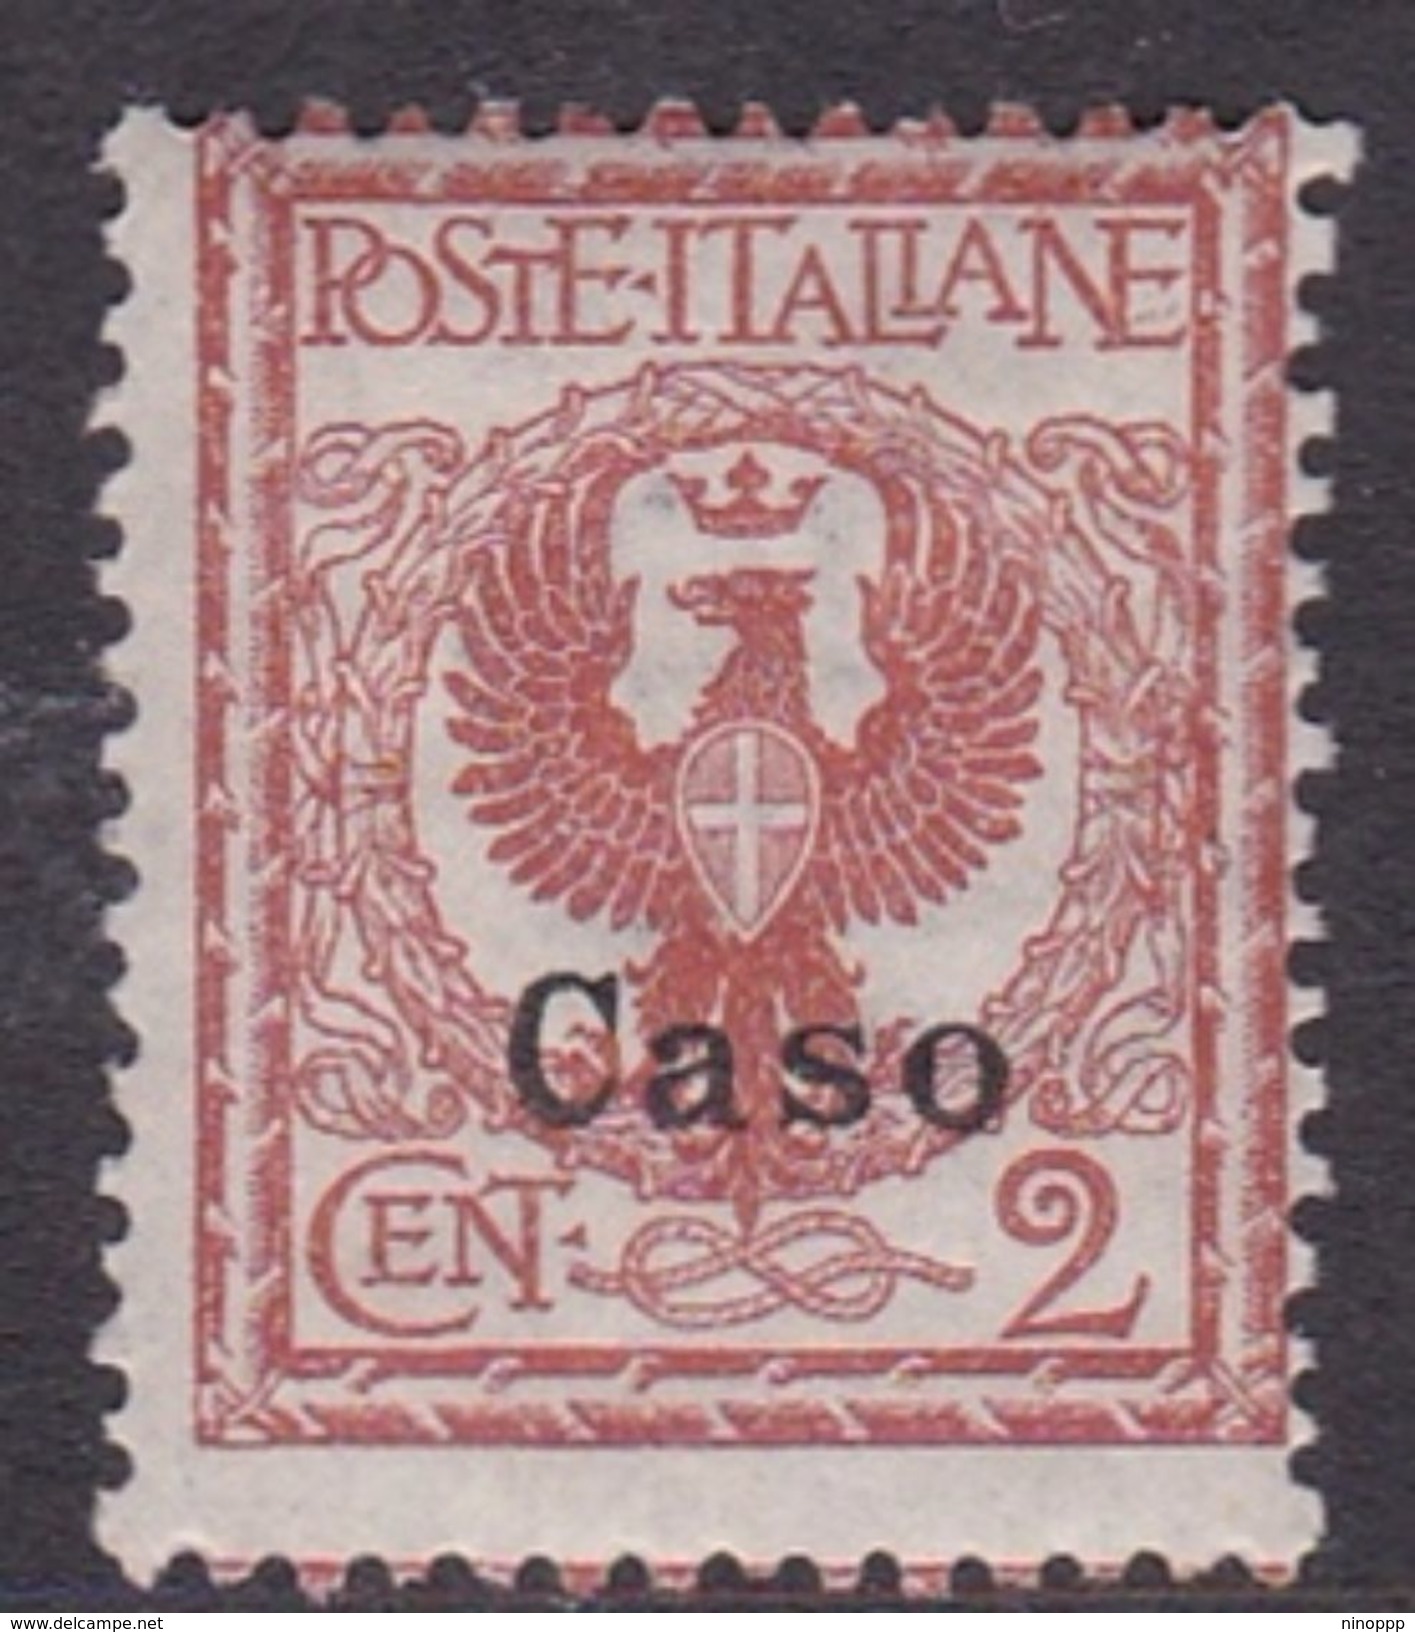 Italy-Colonies And Territories-Aegean-Caso S1  1912  2c Orange Brown MNH - Egeo (Caso)